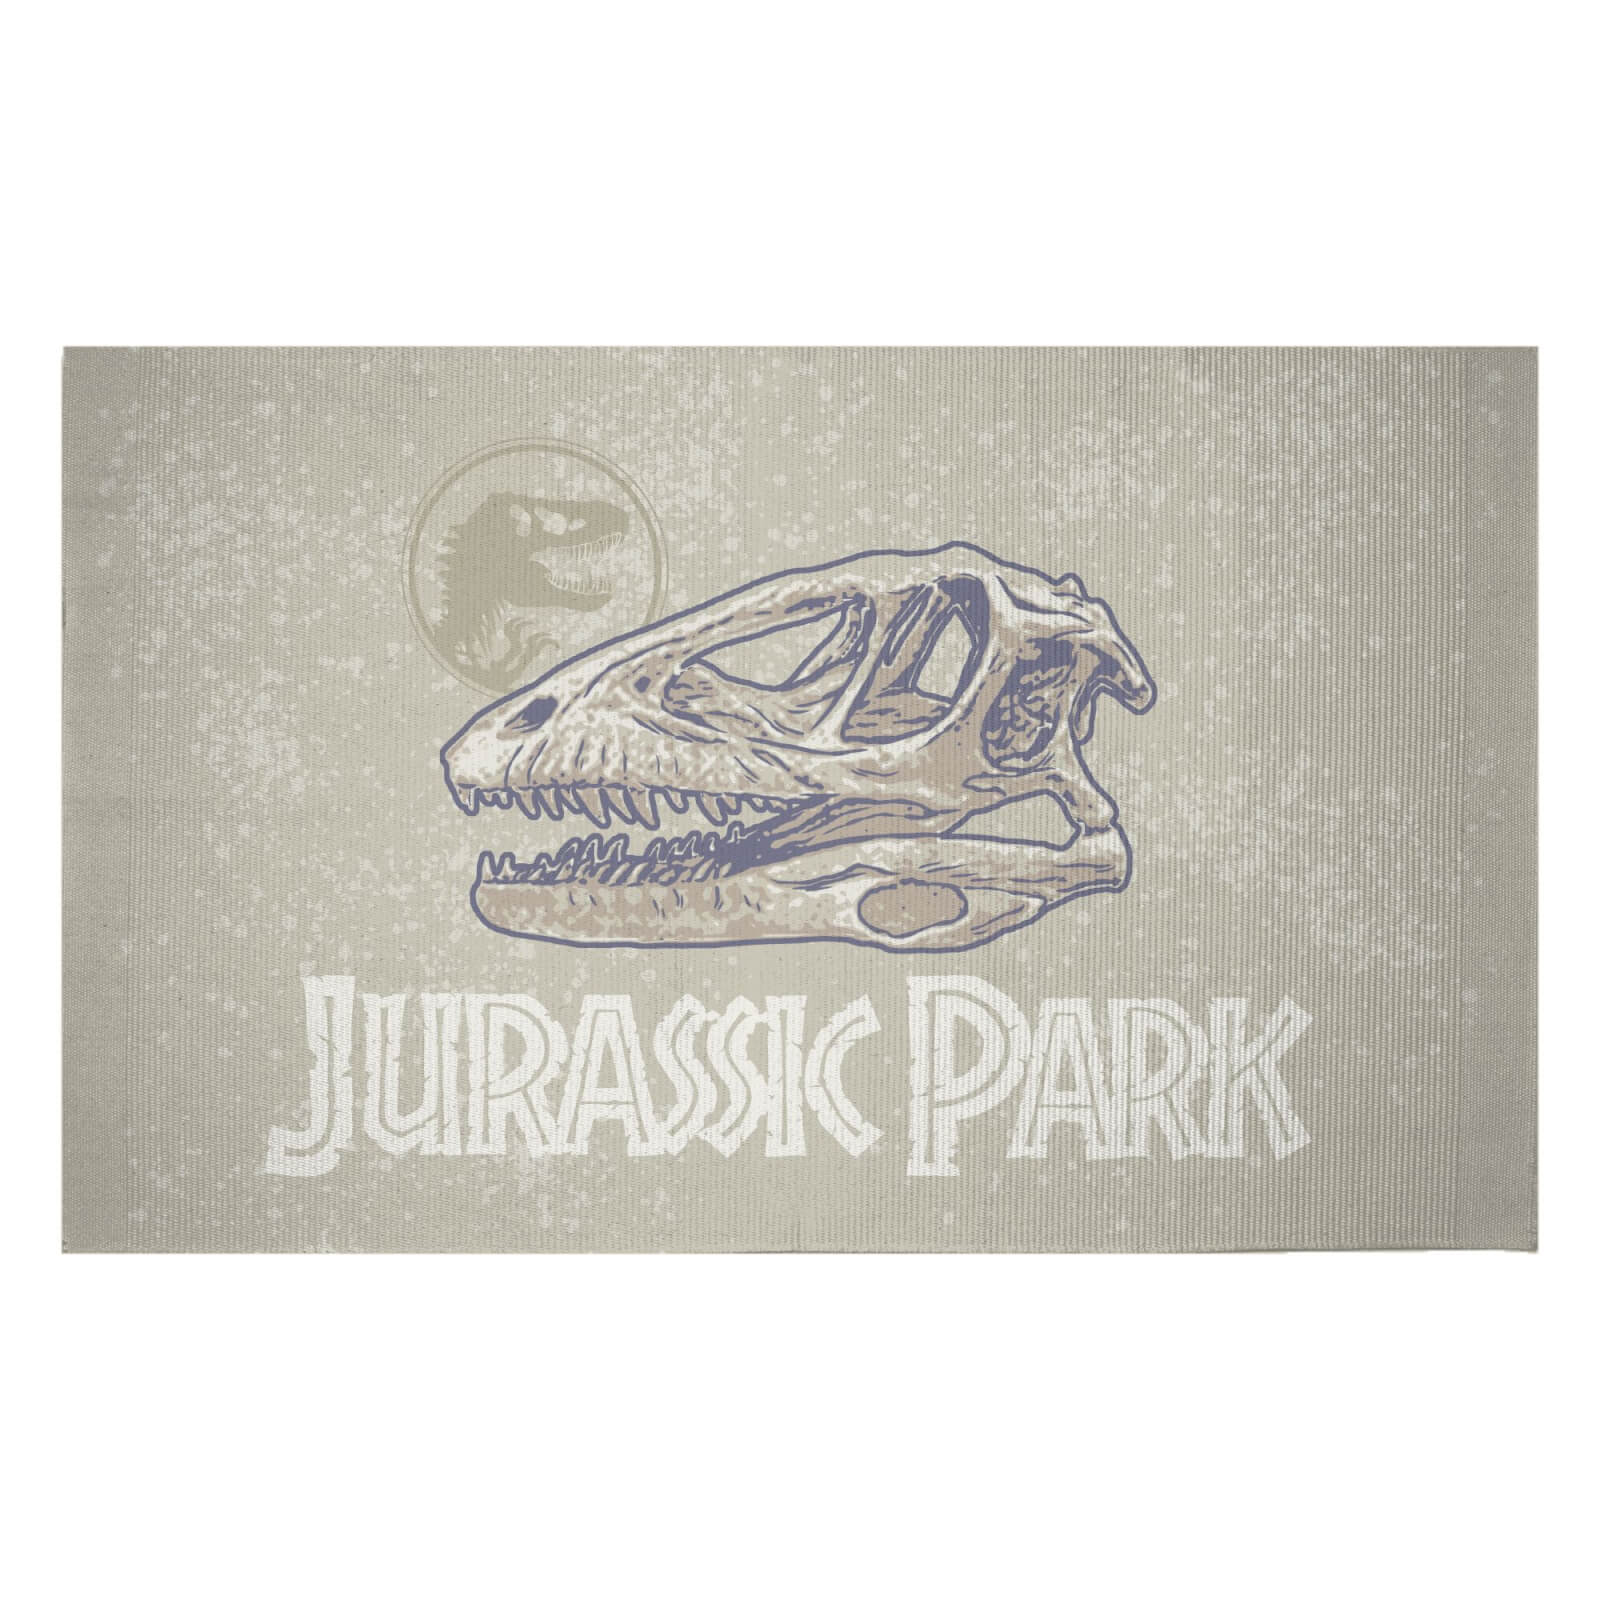 Decorsome x Jurassic Park Evergreen Fossil Head Woven Rug - Small